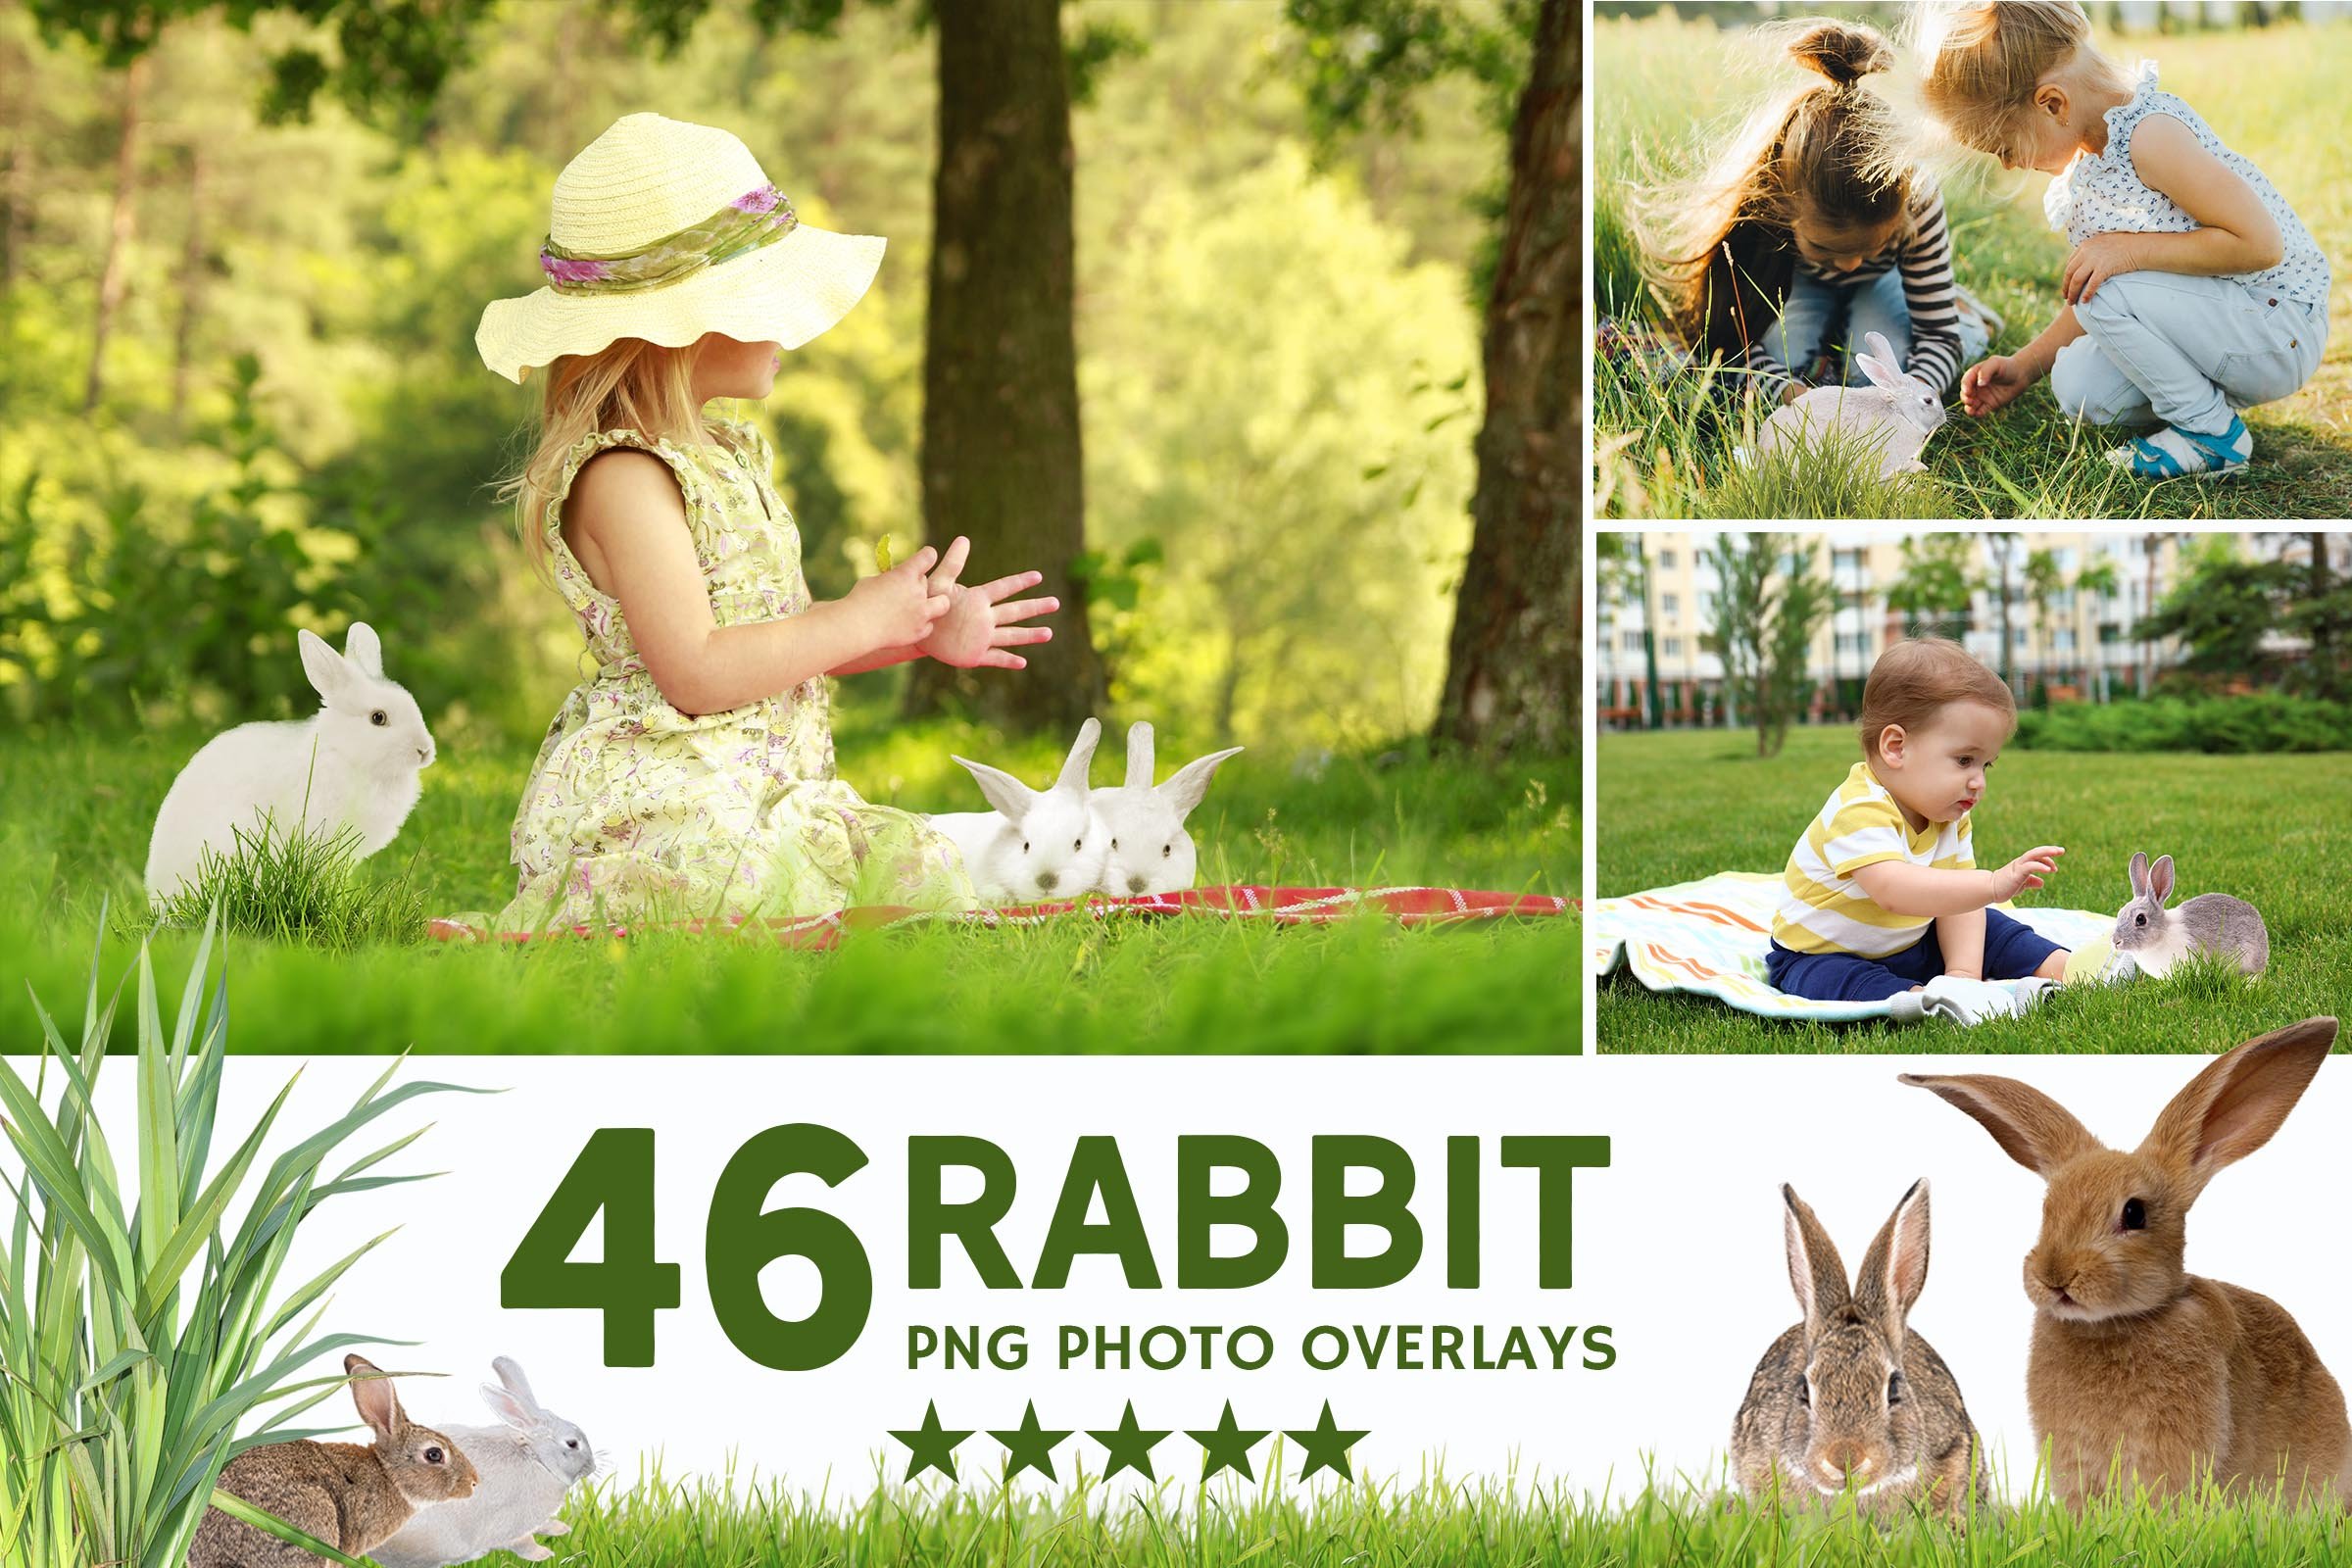 044. rabbits 546